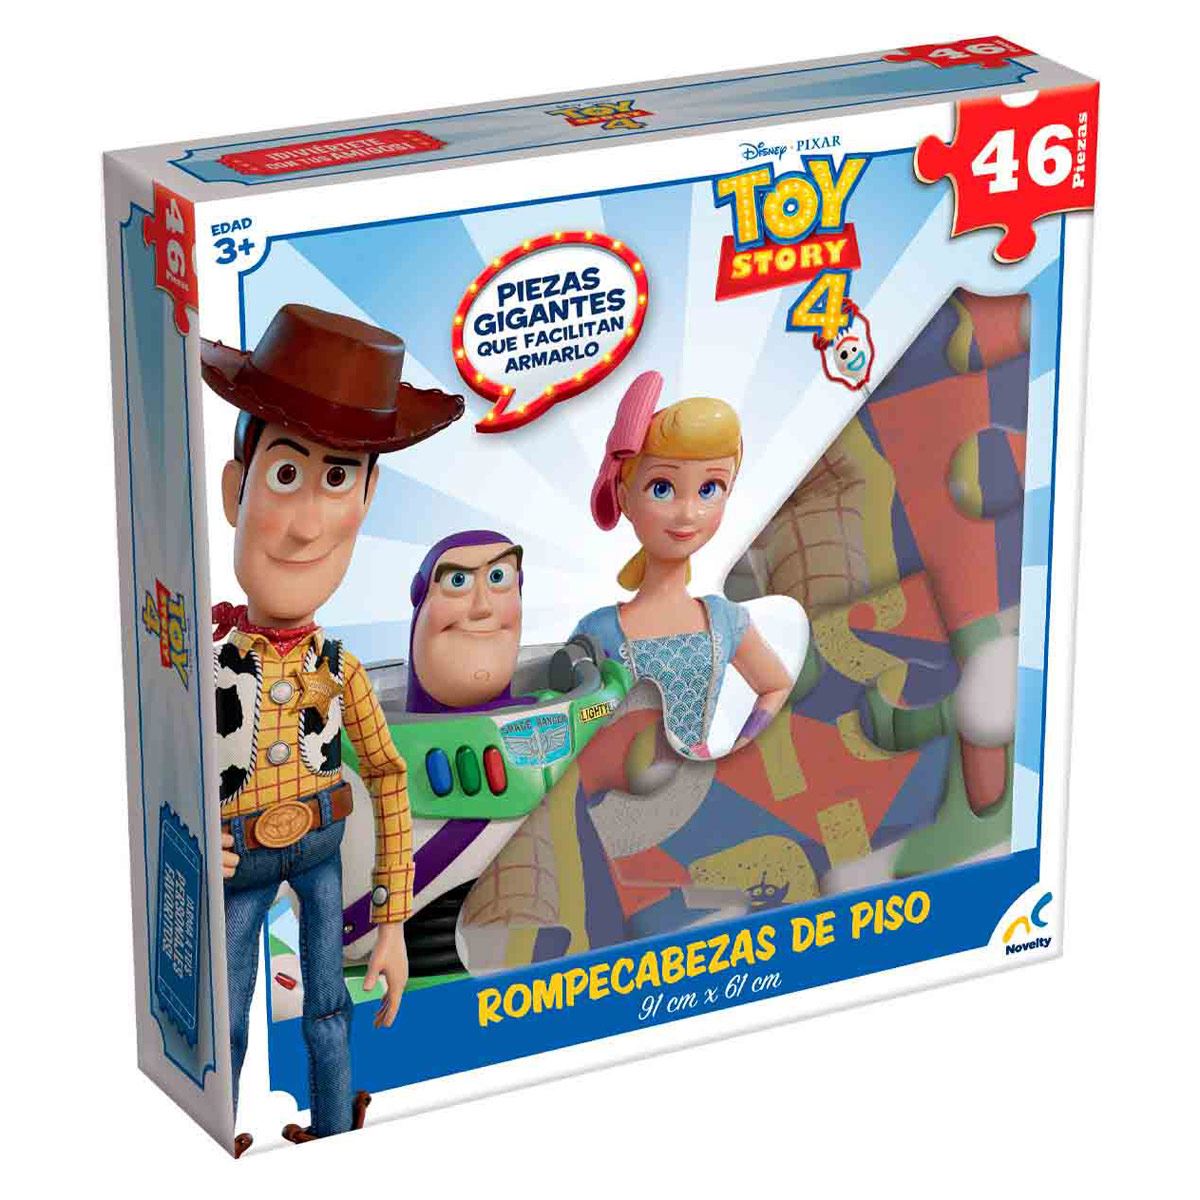 Rompecabezas de Piso Toy Story 4 Novelty